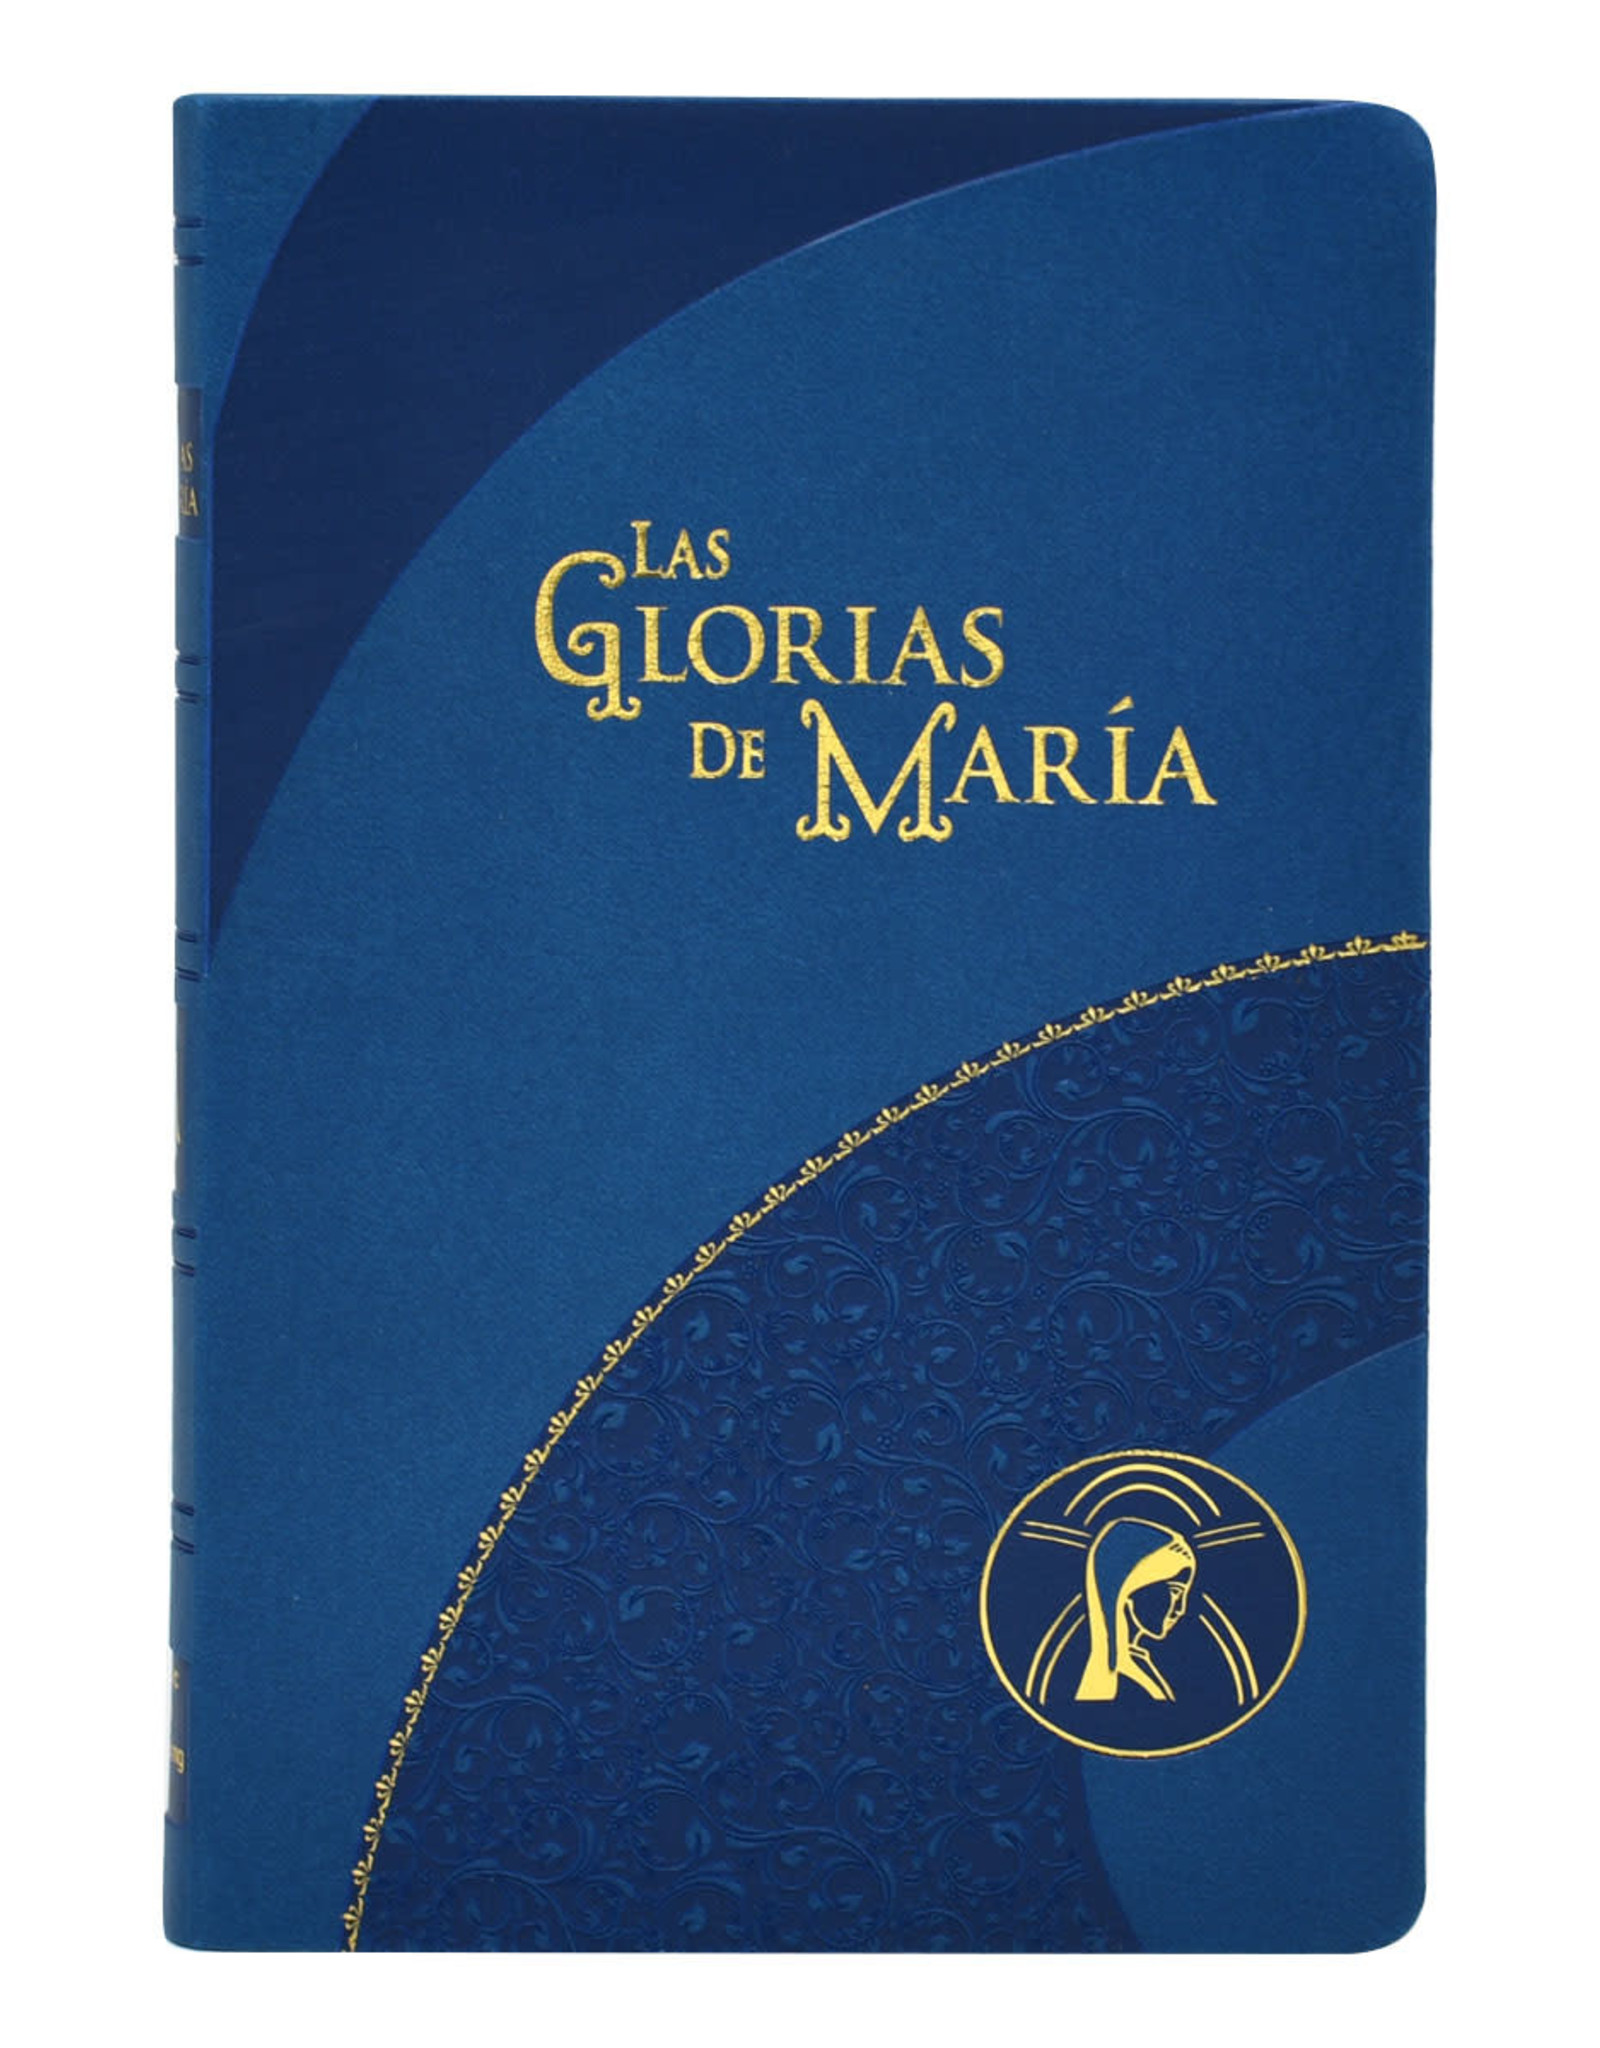 Catholic Book Publishing Las Glorias de Maria (The Glories of Mary)